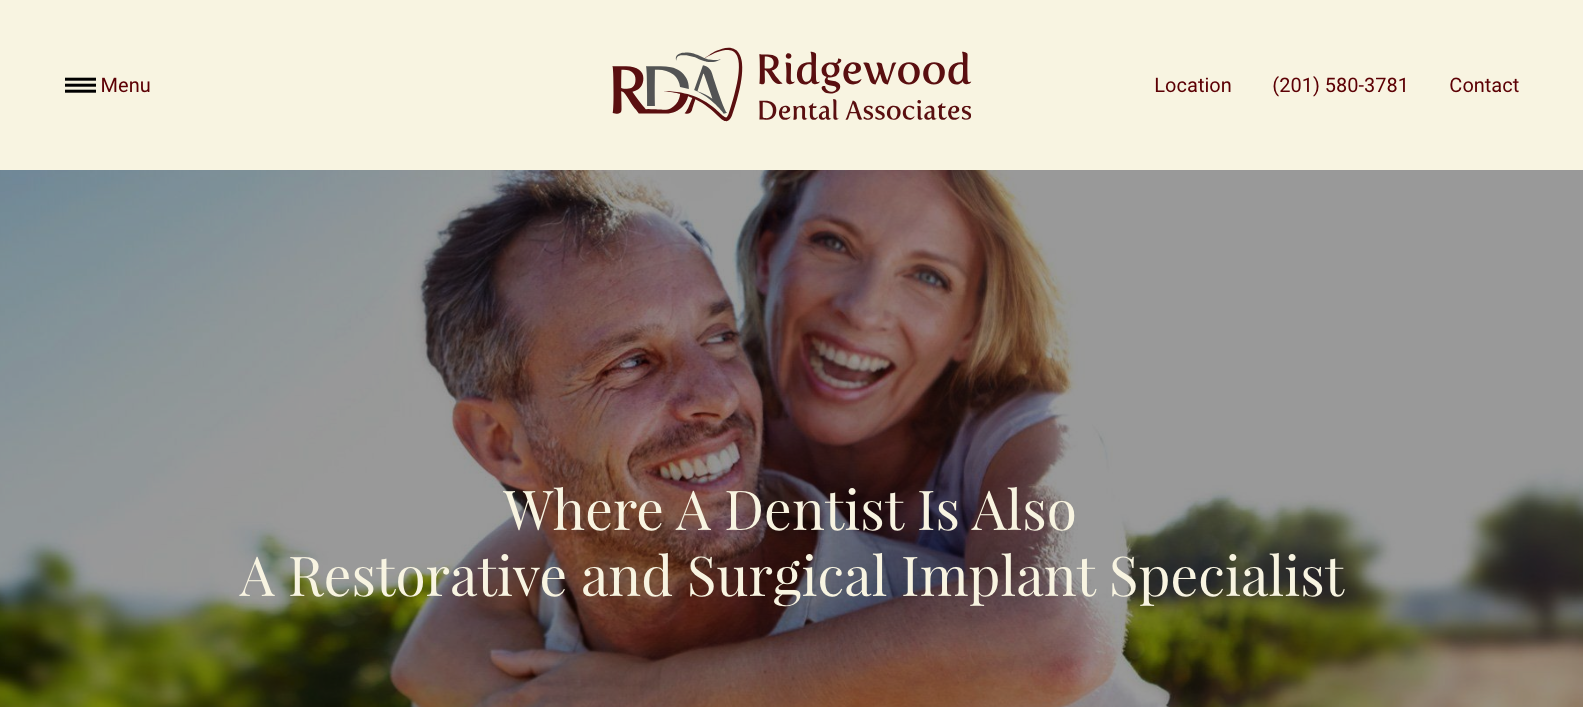 Ridgewood Dental Associates Photo